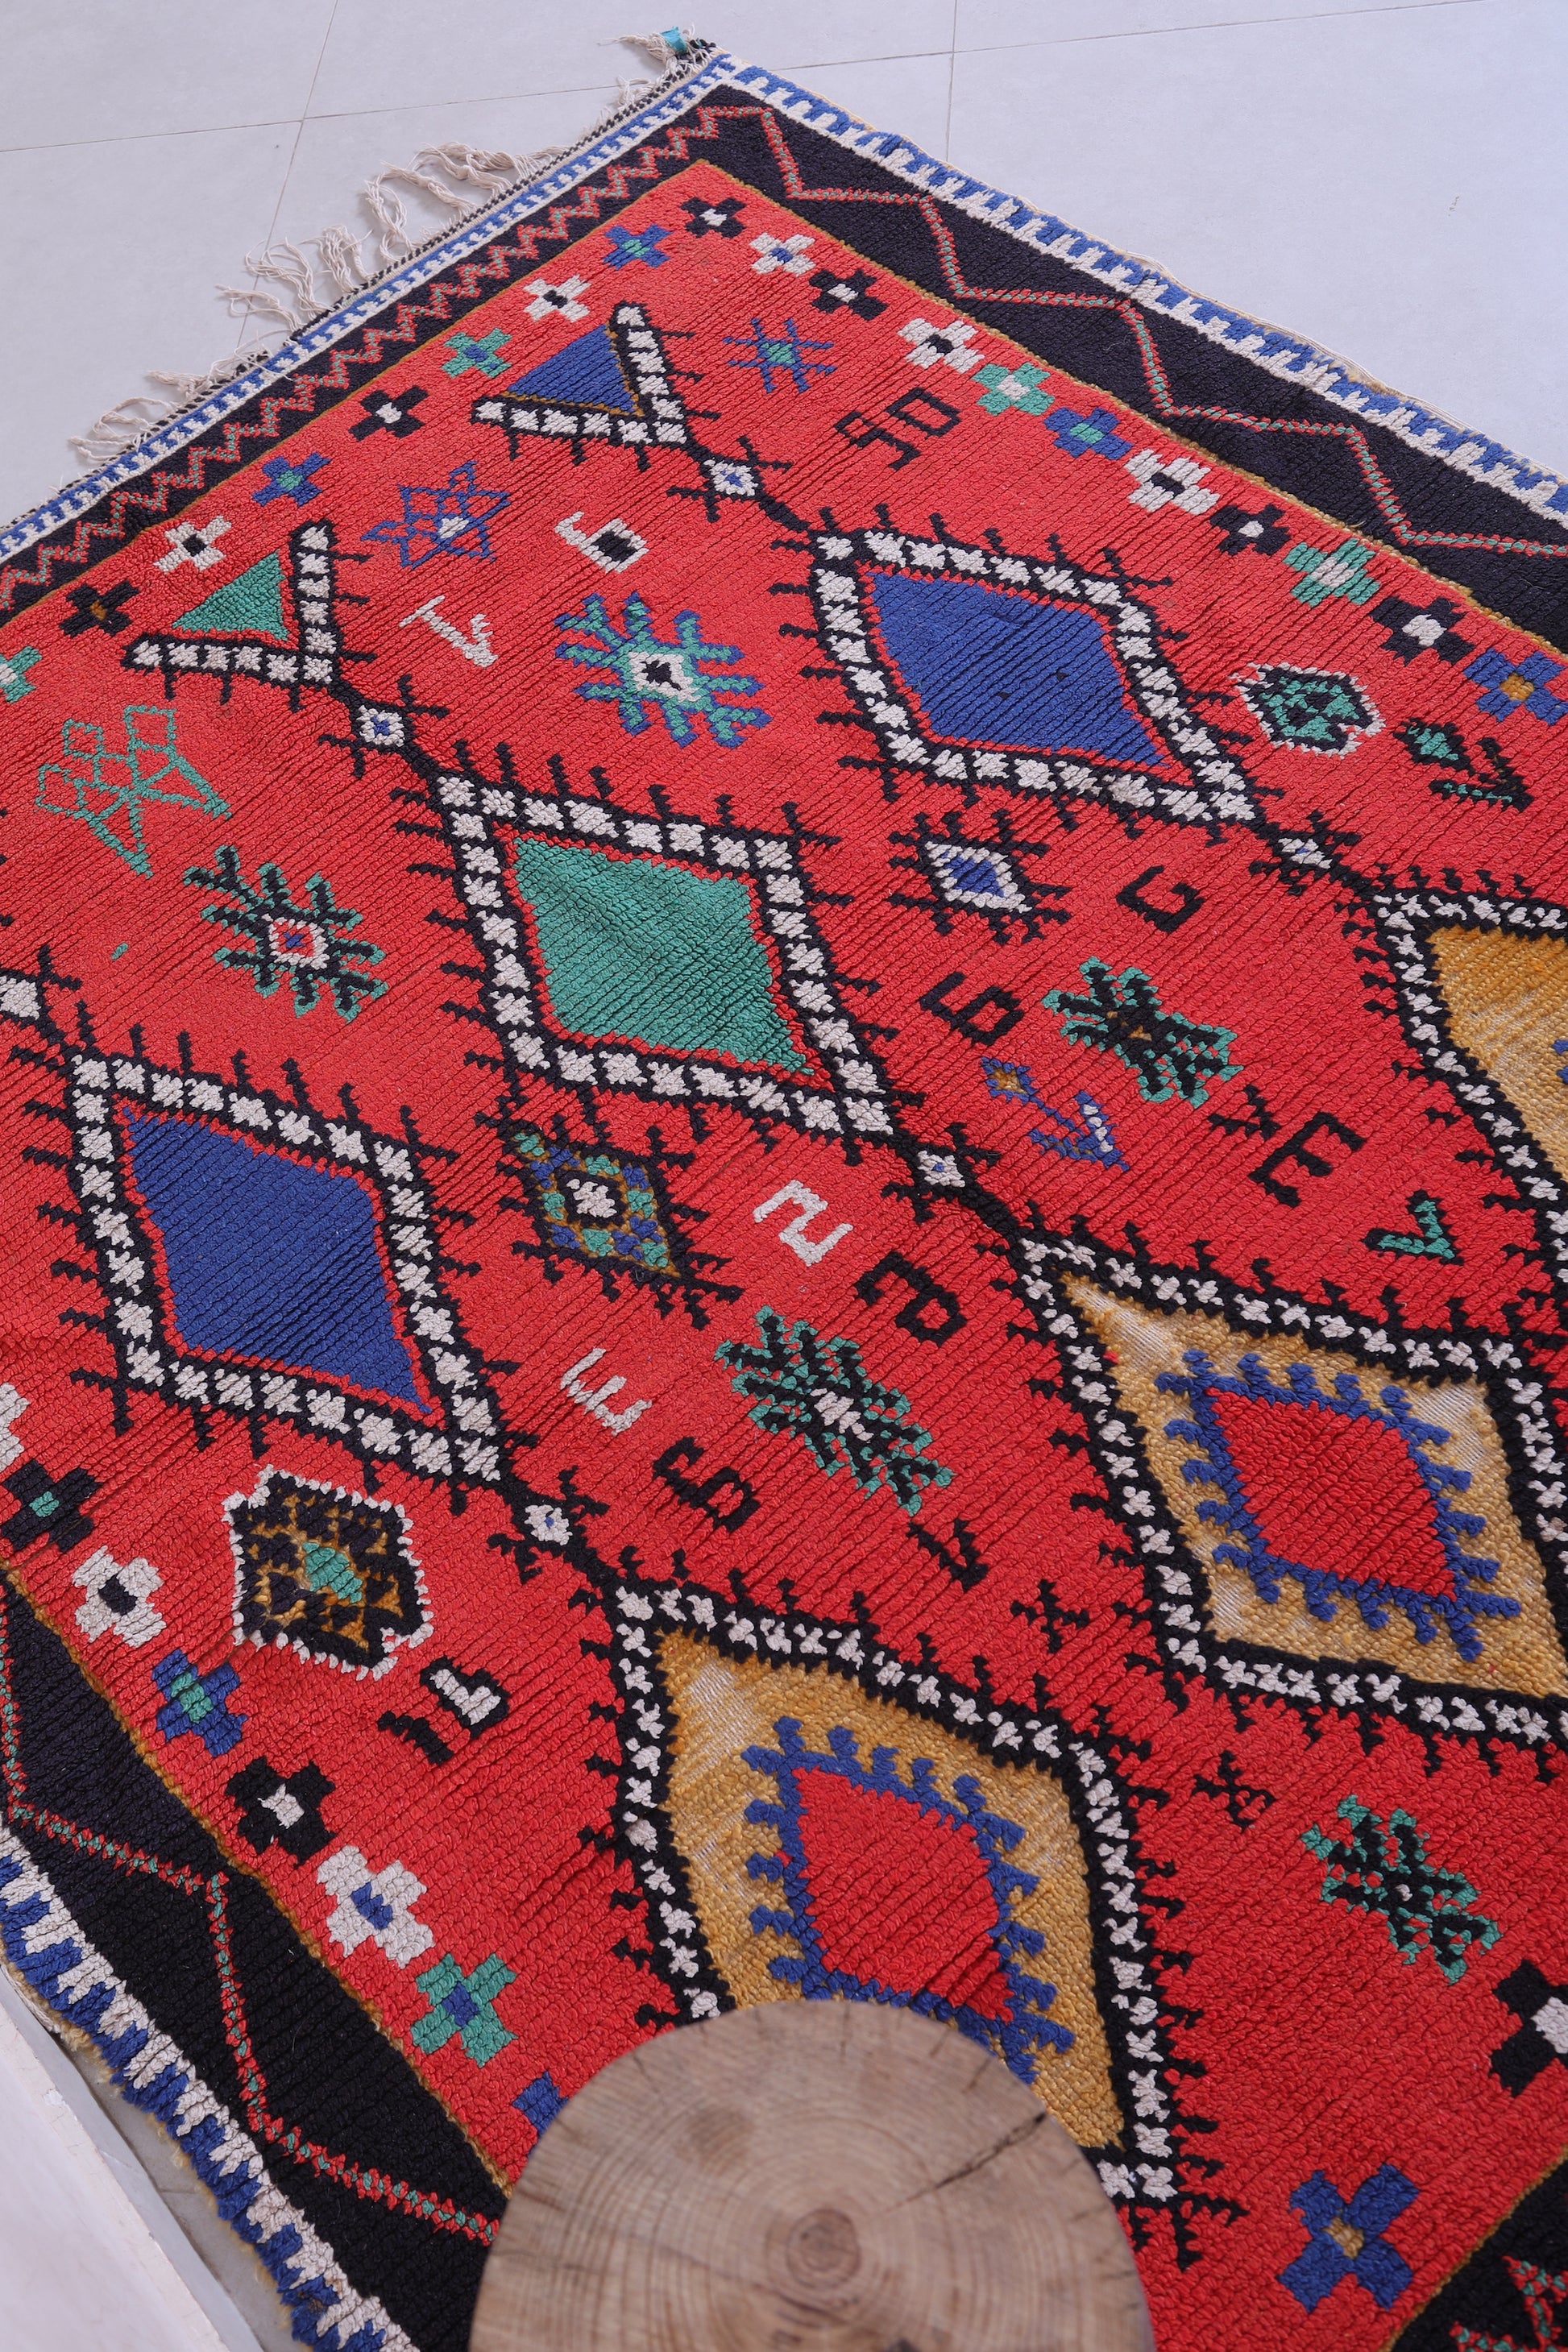 Colorful handmade berber red rug 4.6 X 5.9 Feet